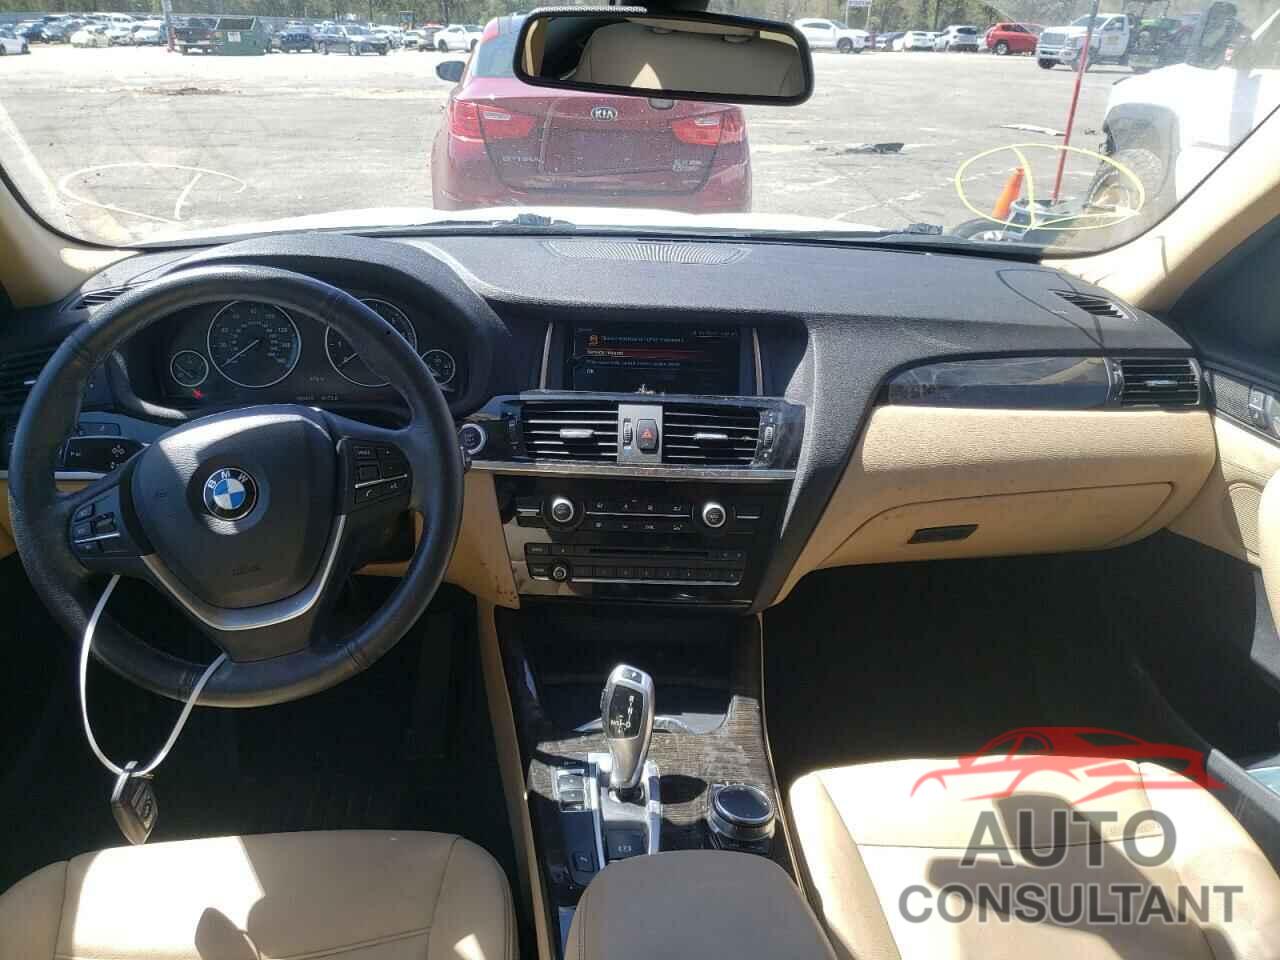 BMW X3 2017 - 5UXWZ7C35H0V91919